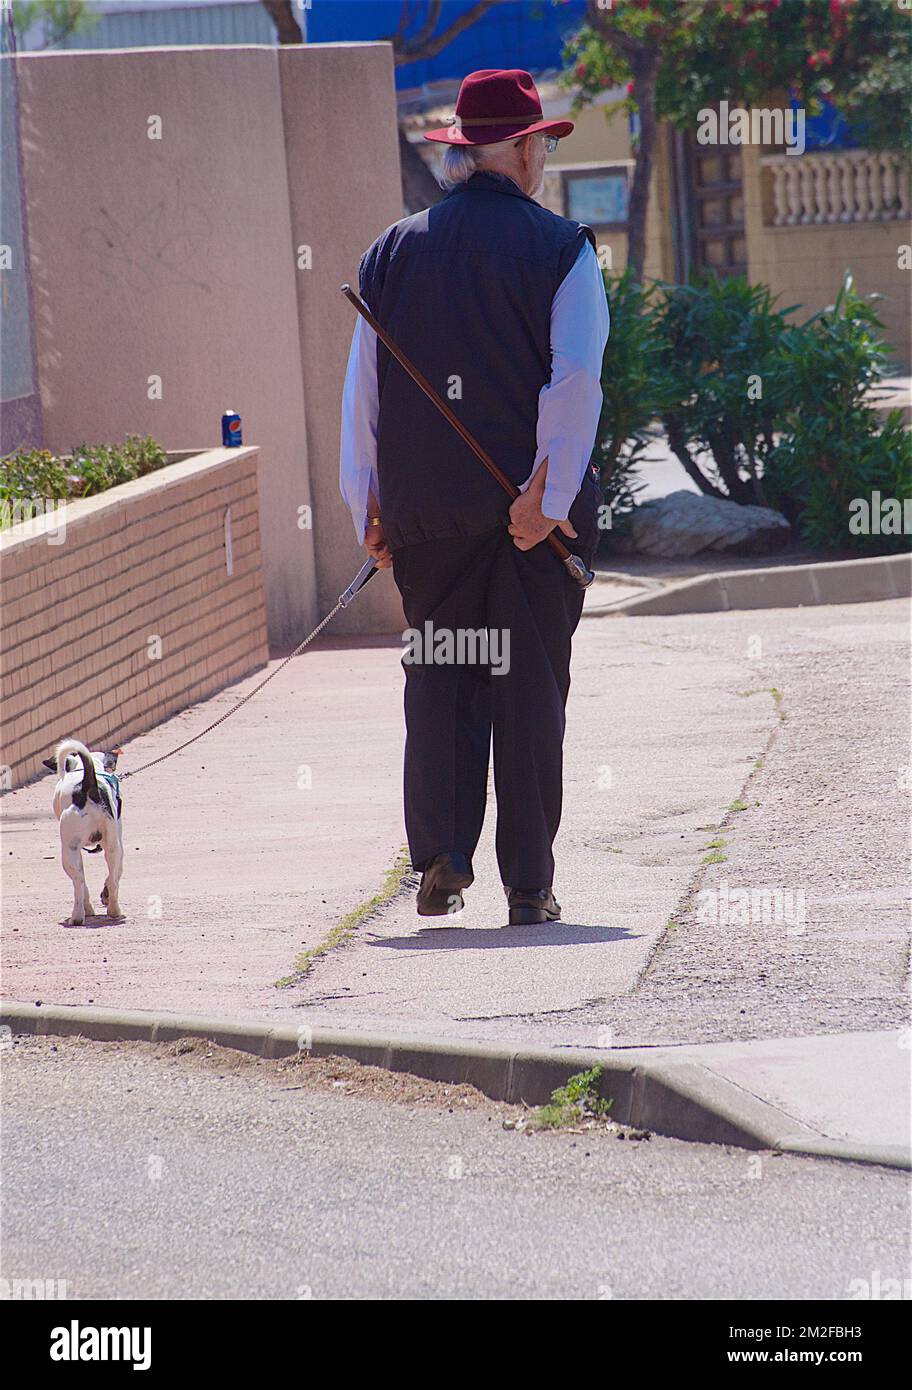 Walking with dog | Chien en promenade 07/05/2018 Stock Photo